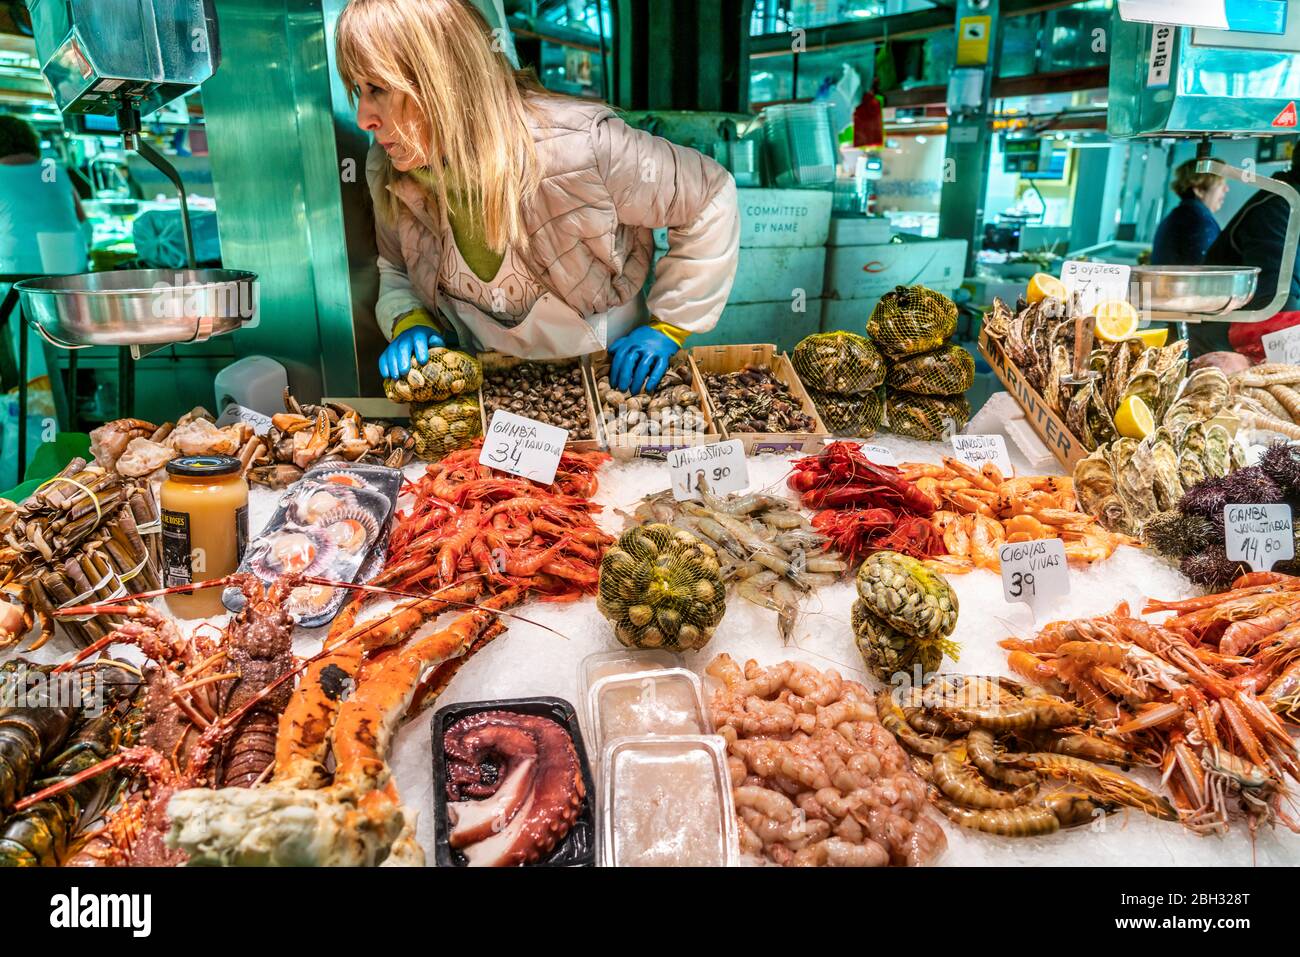 Mercat de la Boqueria, fresh fish, seefood, sales woman, Market hall, Barcelona, Spain Stock Photo